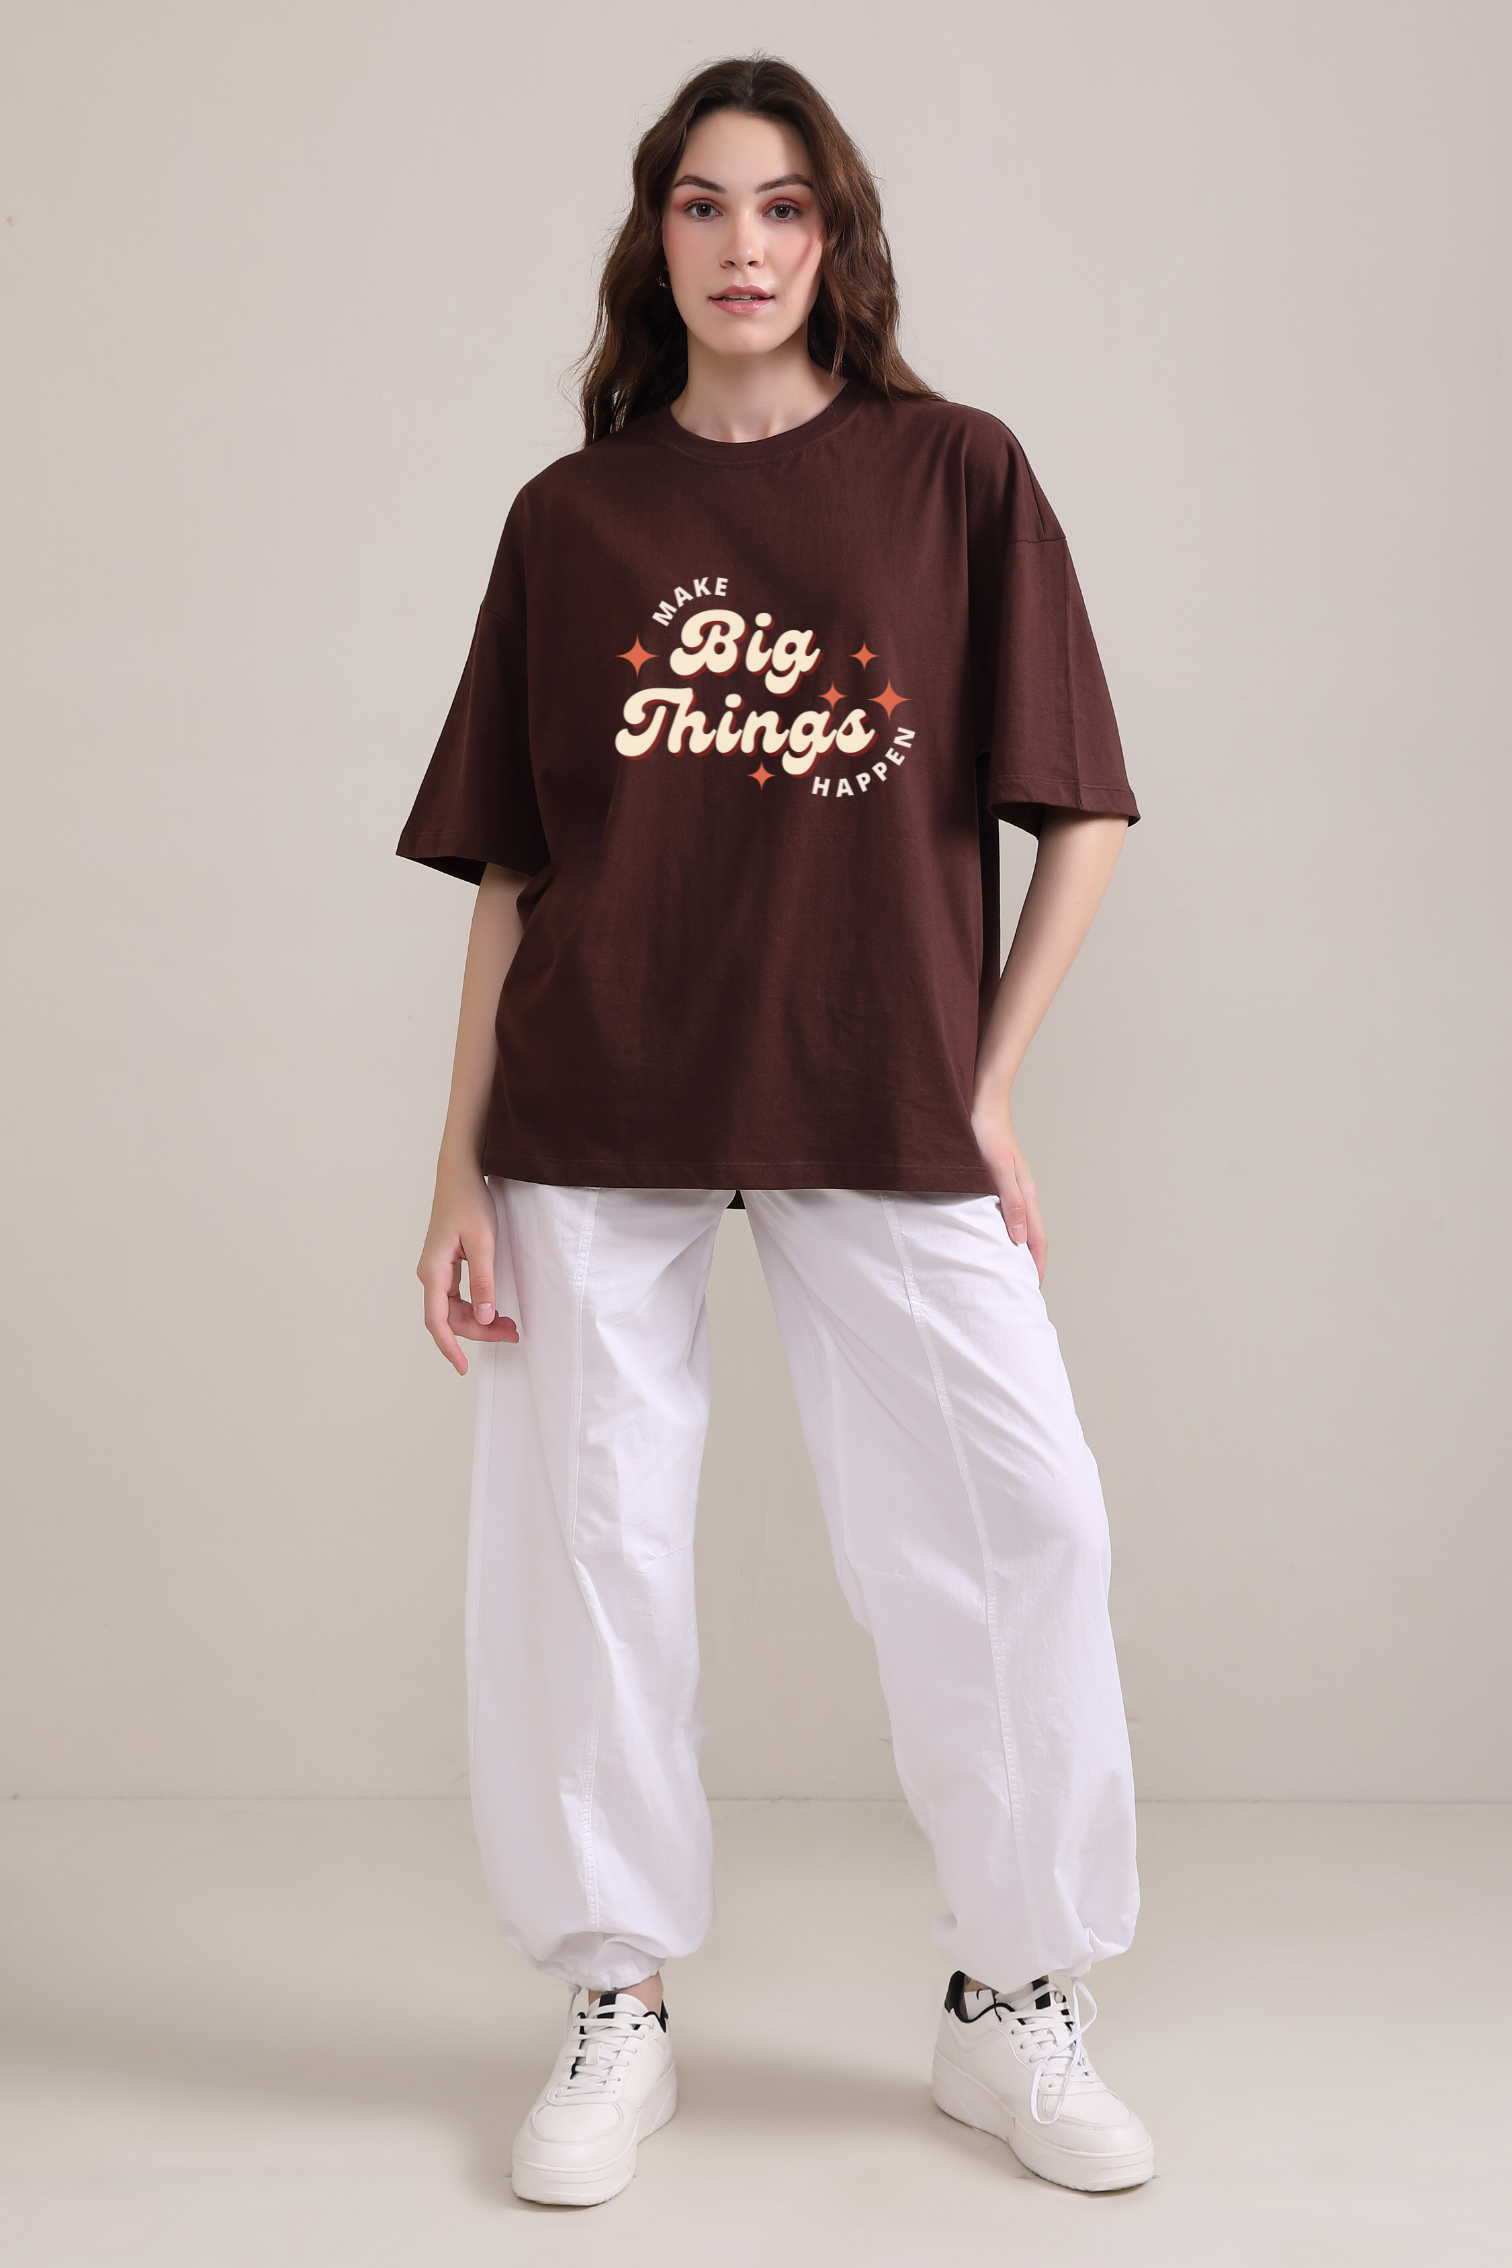 Make Big things Happen- Oversized t-shirt